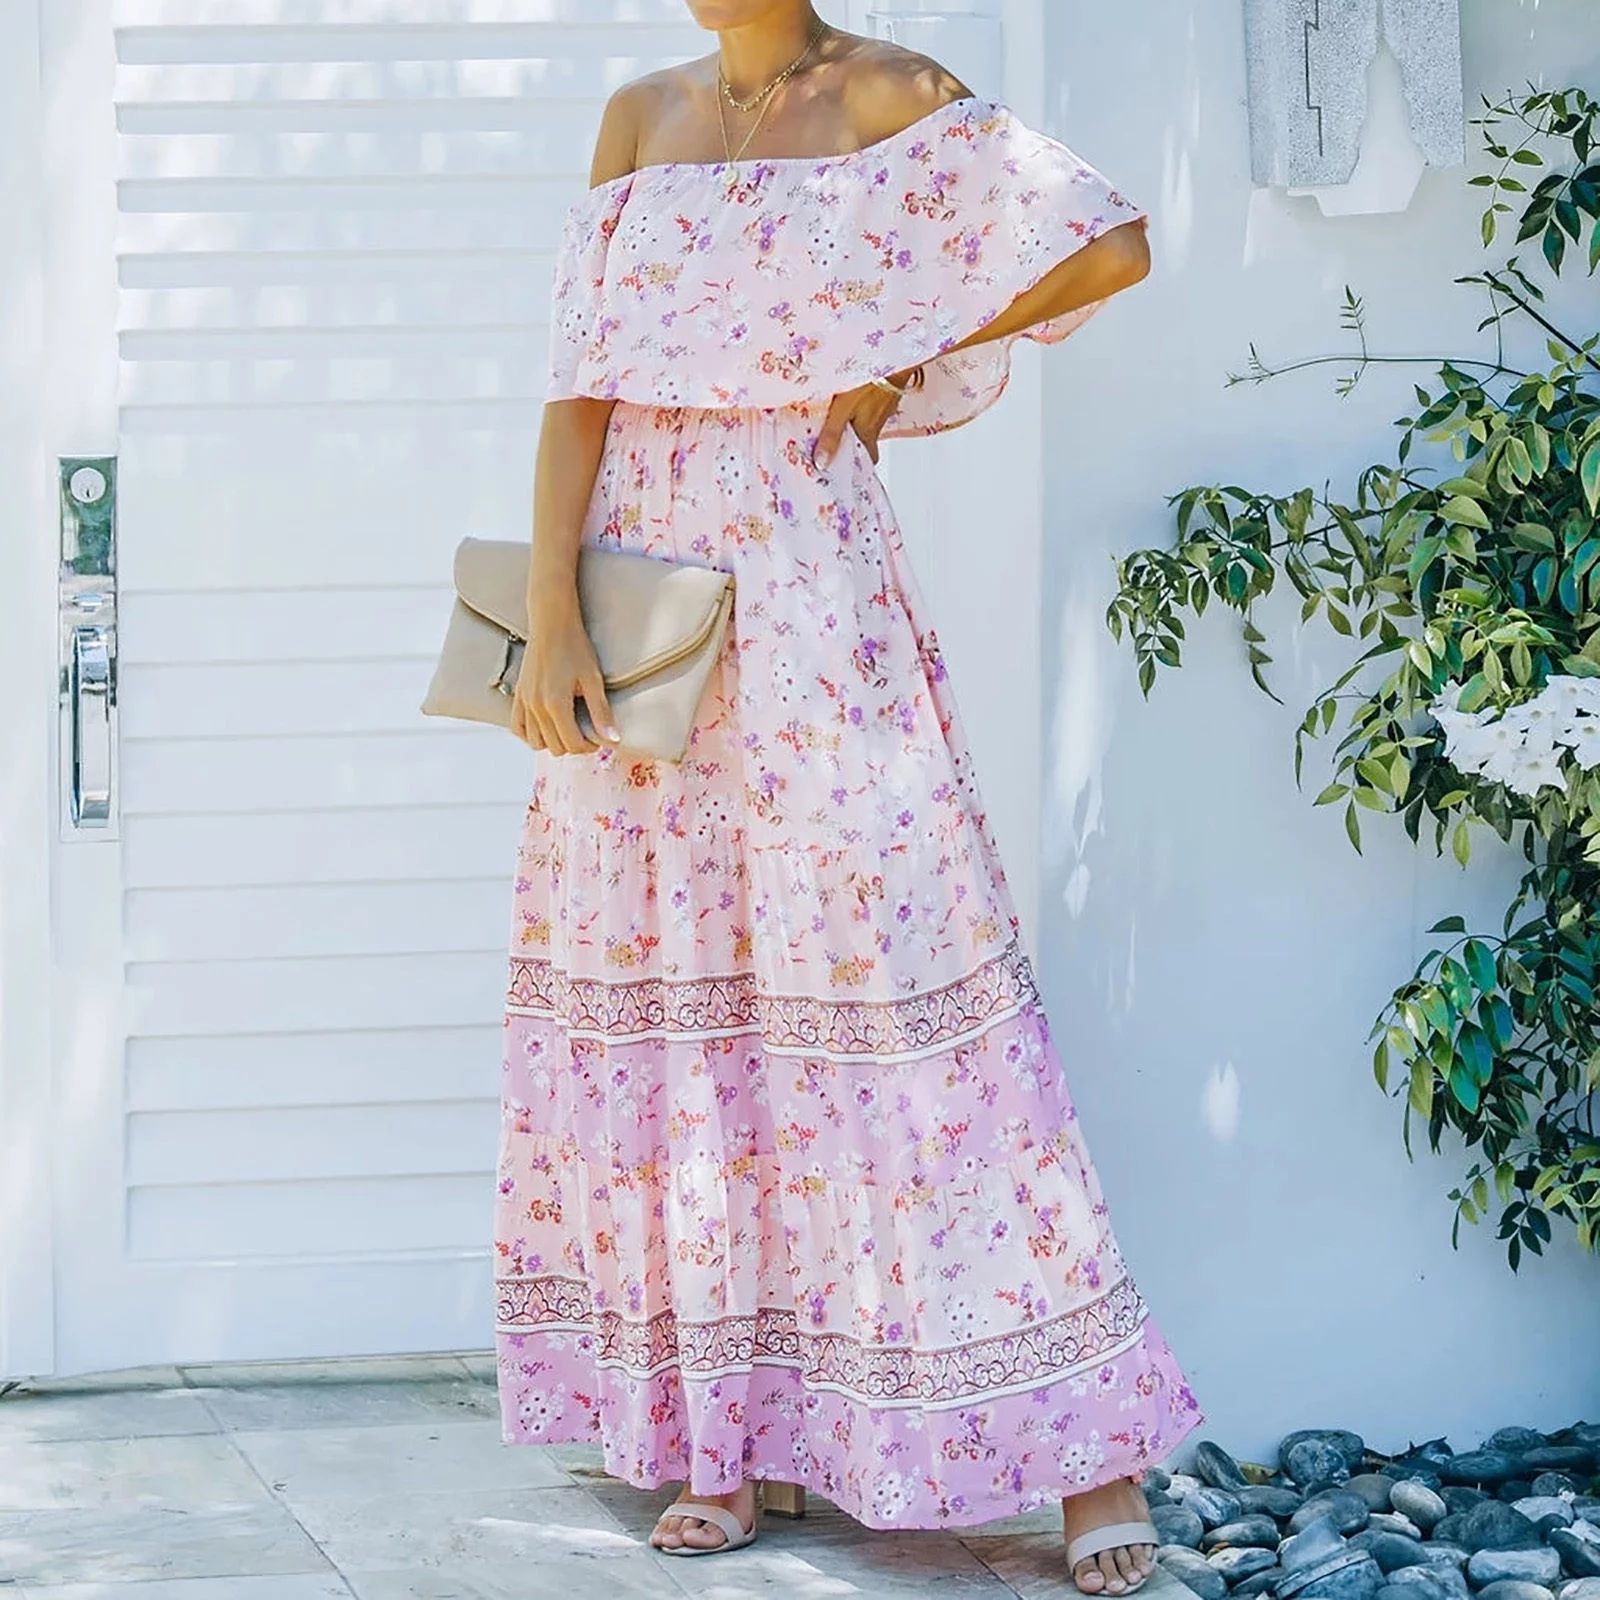 Lopecy-Sta Floral Print Dresses for Women Off the Shoulder Boho Dress Summer Pink - XL | Walmart (US)